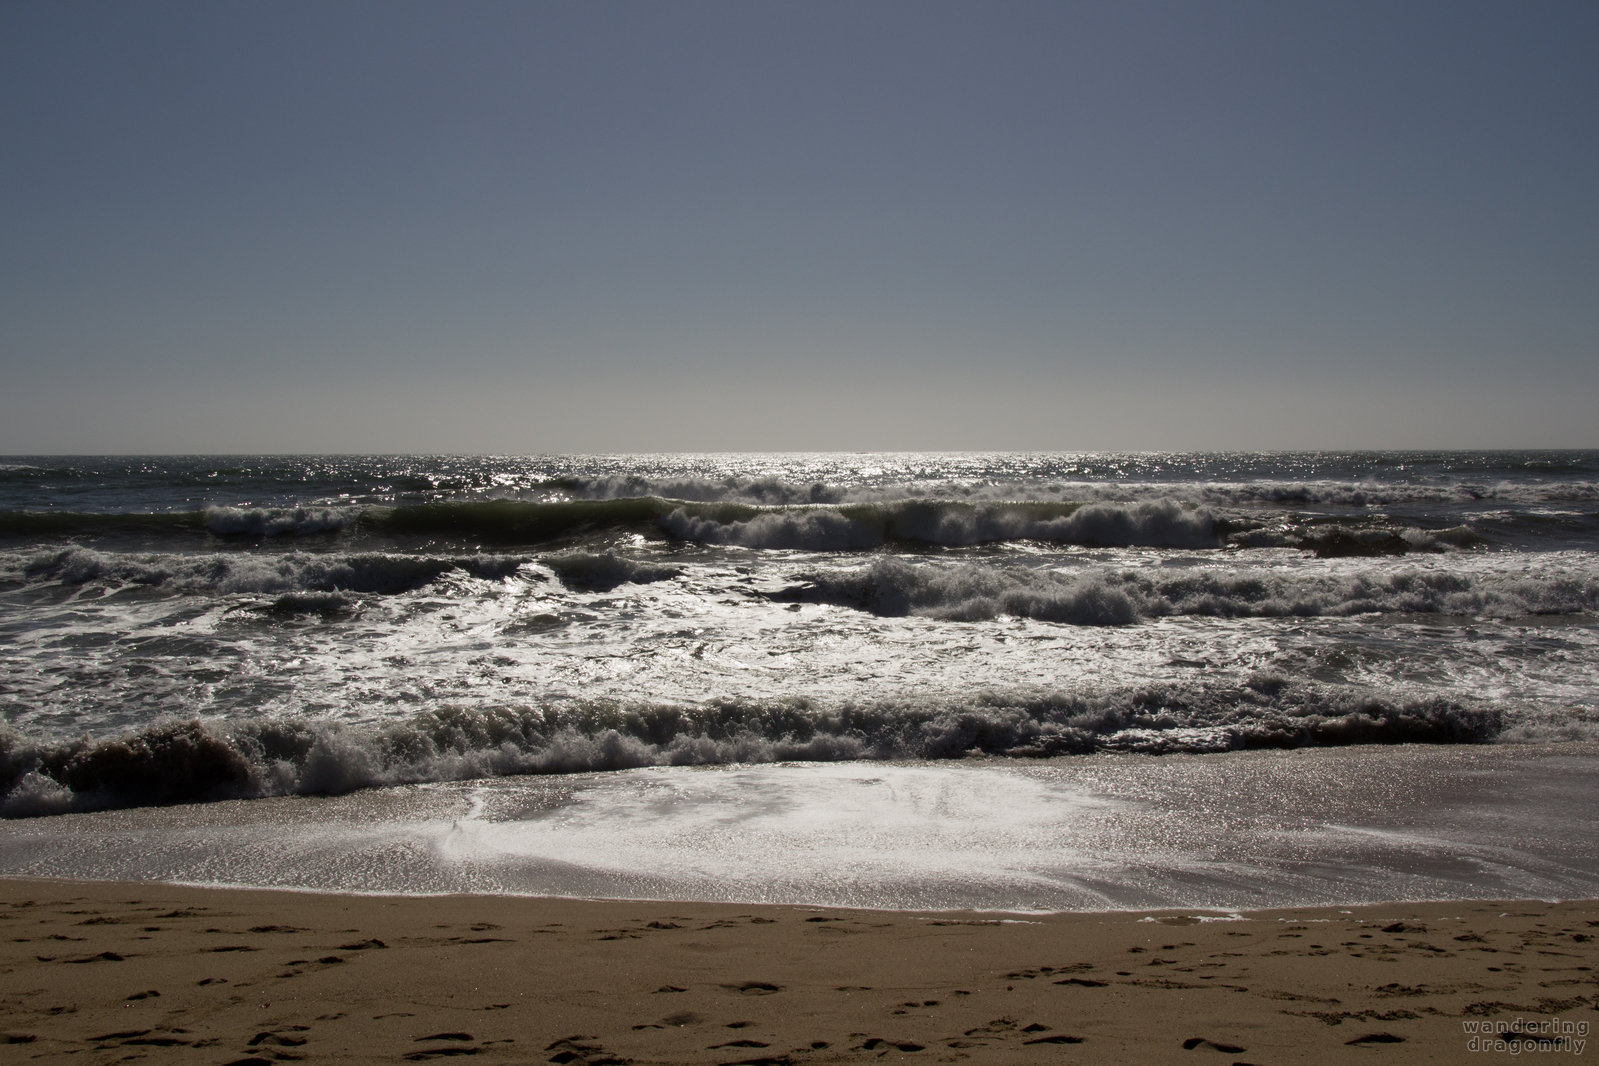 Shiny reflections -- beach, ocean, sand, sunlight, wave